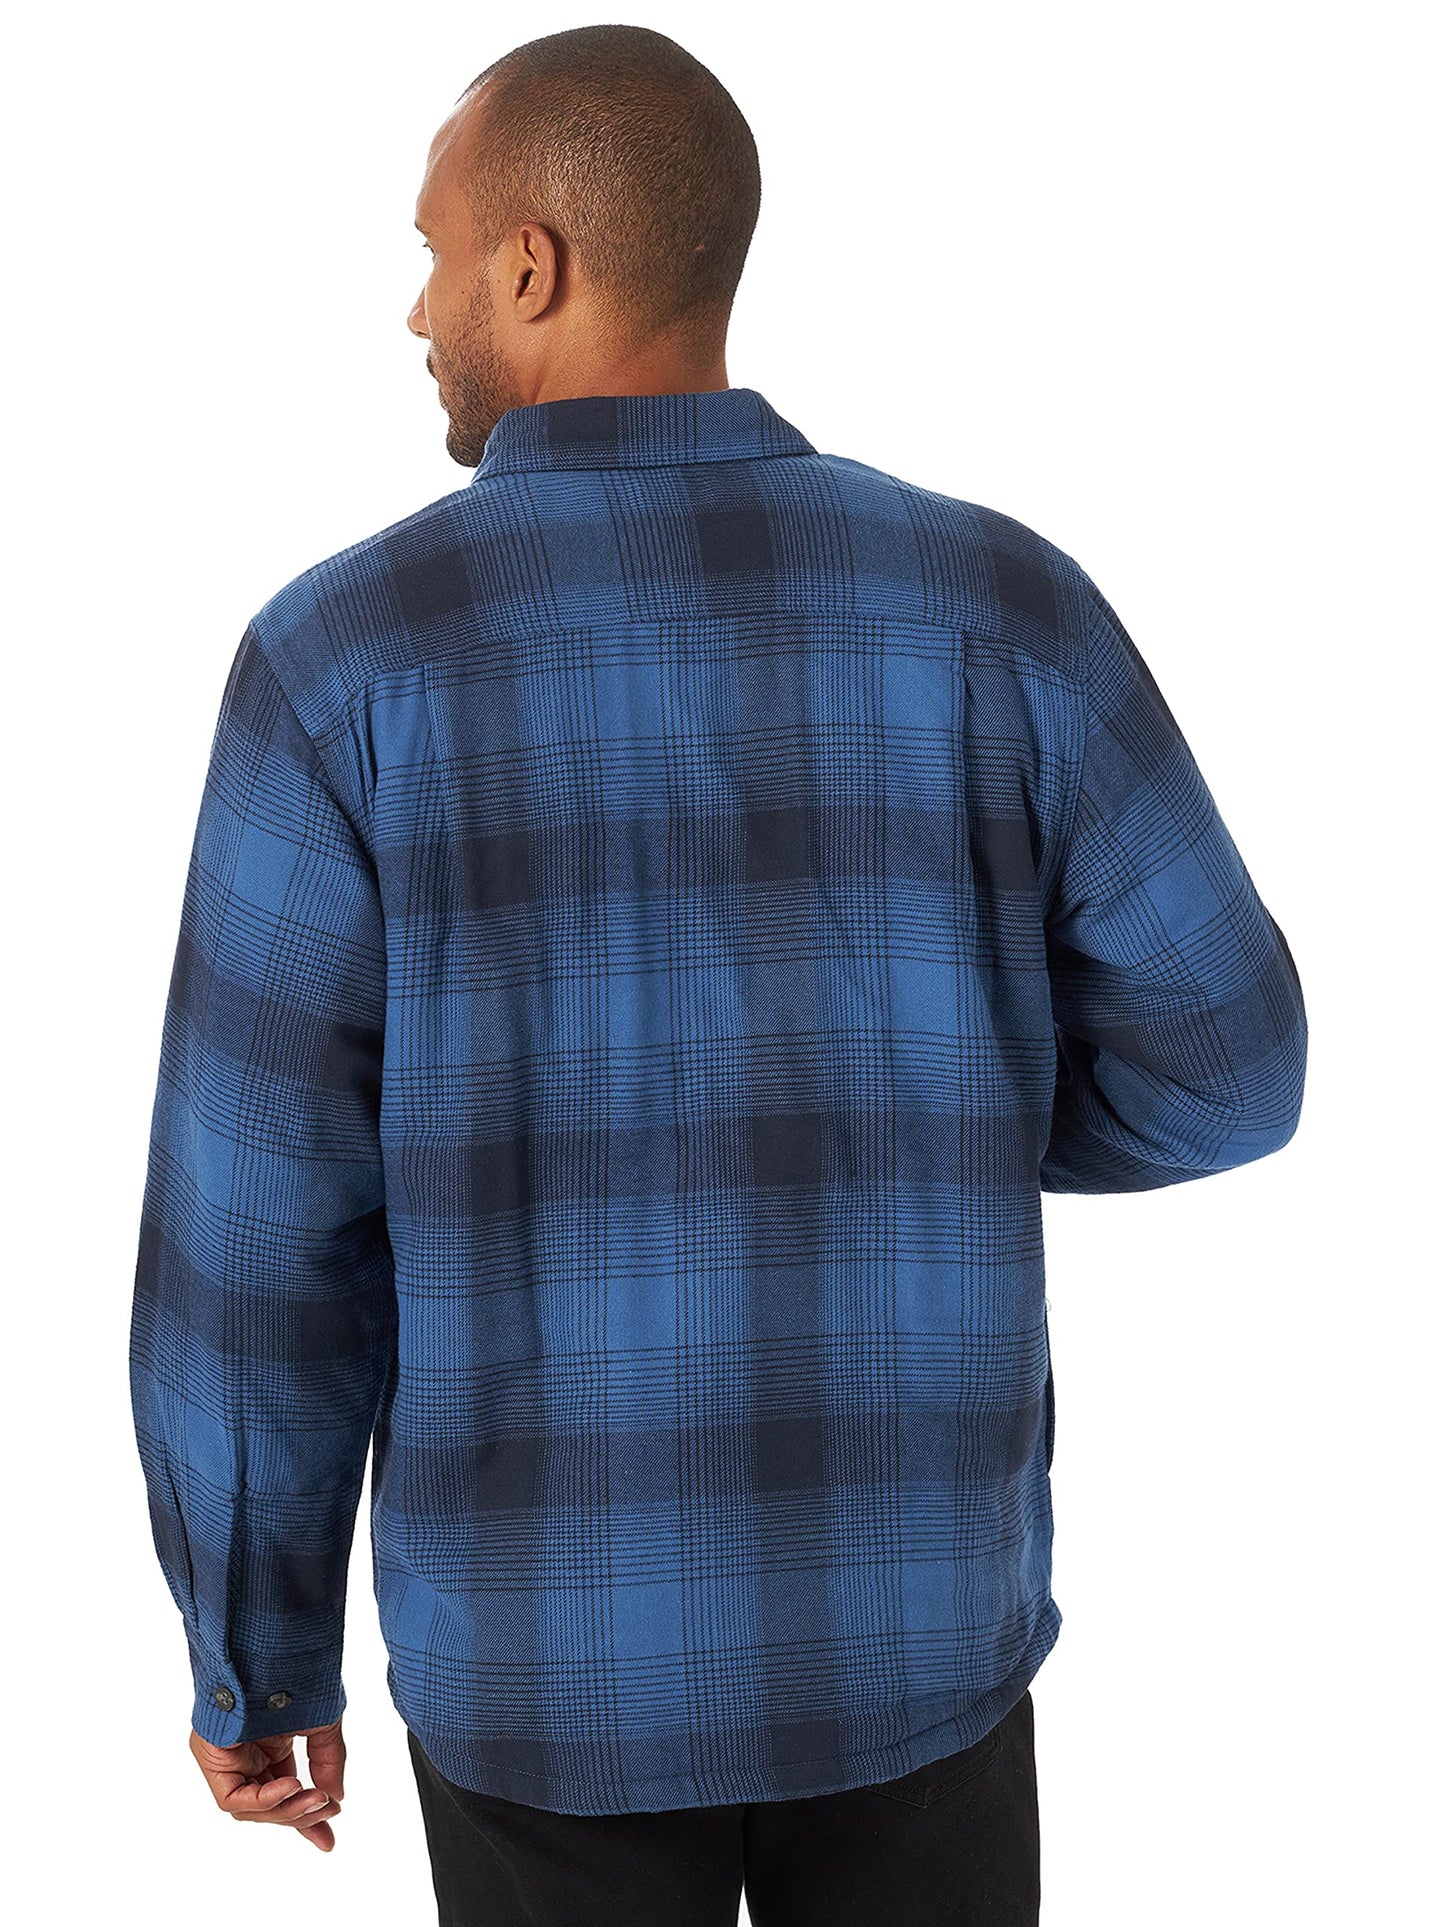 Wrangler Authentics Men's Long Sleeve Sherpa Lined Shirt Jacket, Admiral Blue, Large